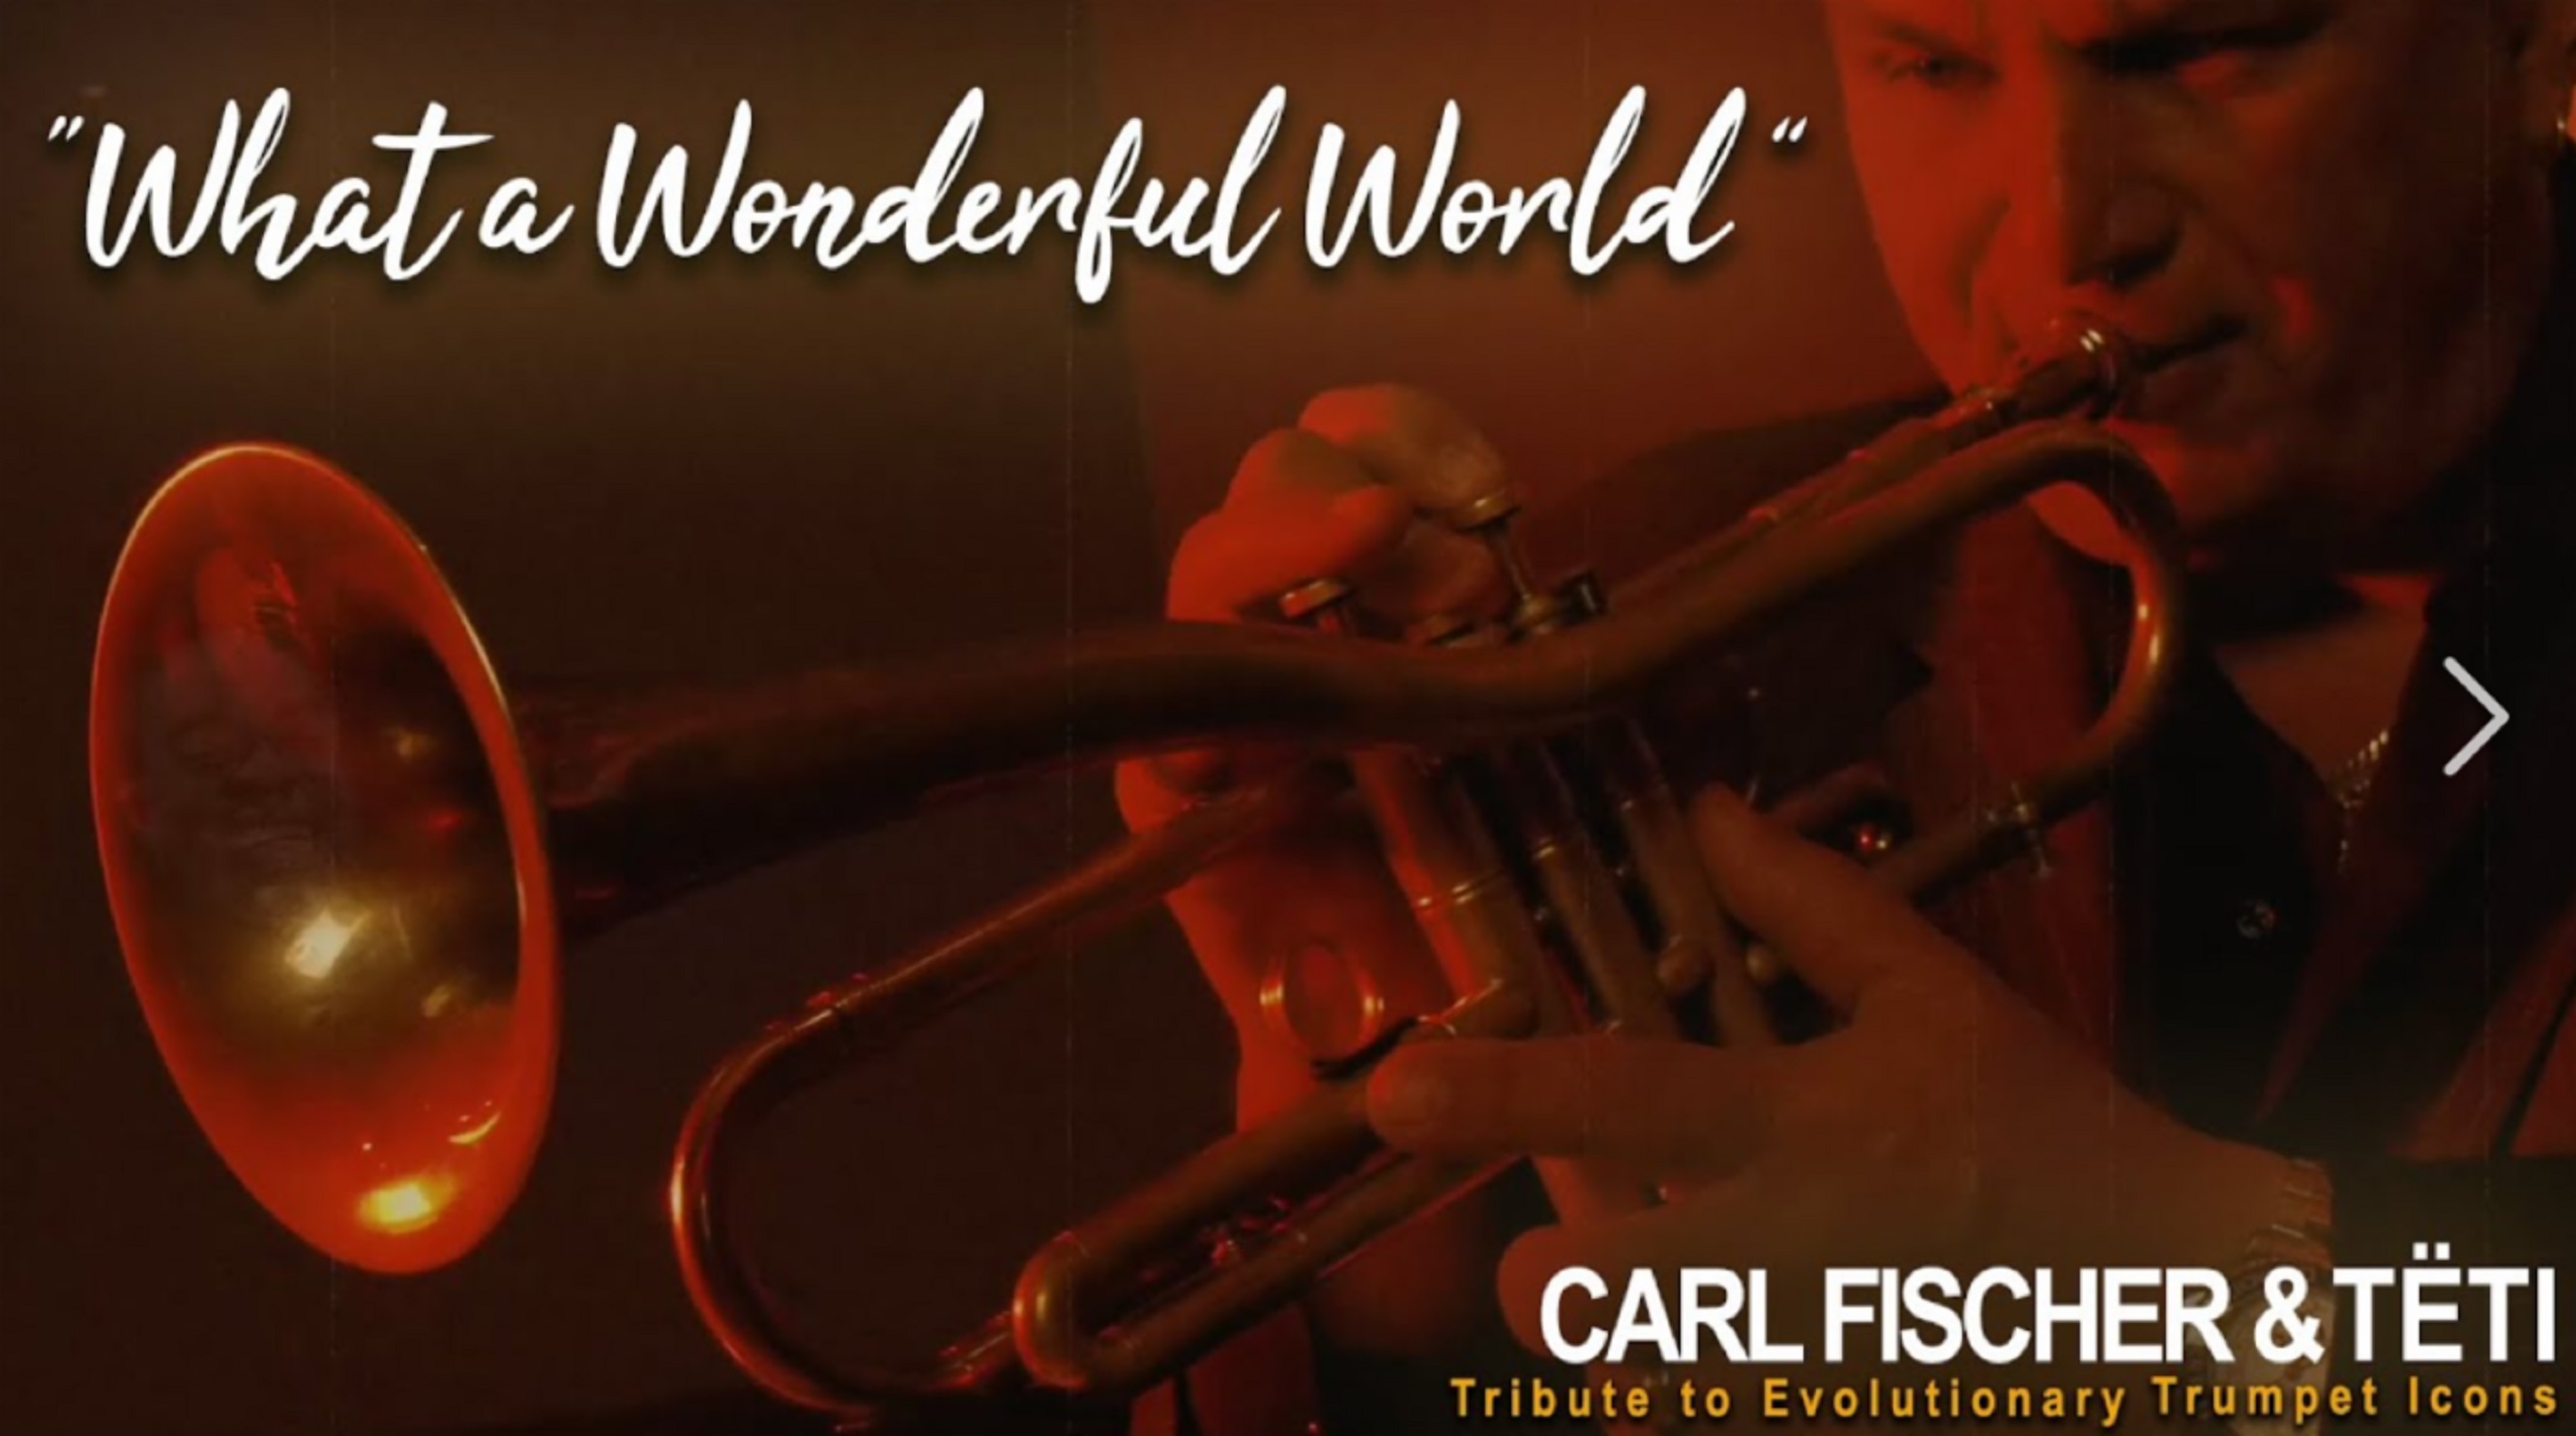 Billy Joel Trumpeter Carl Fischer & T.Ë.T.I. Release First Single